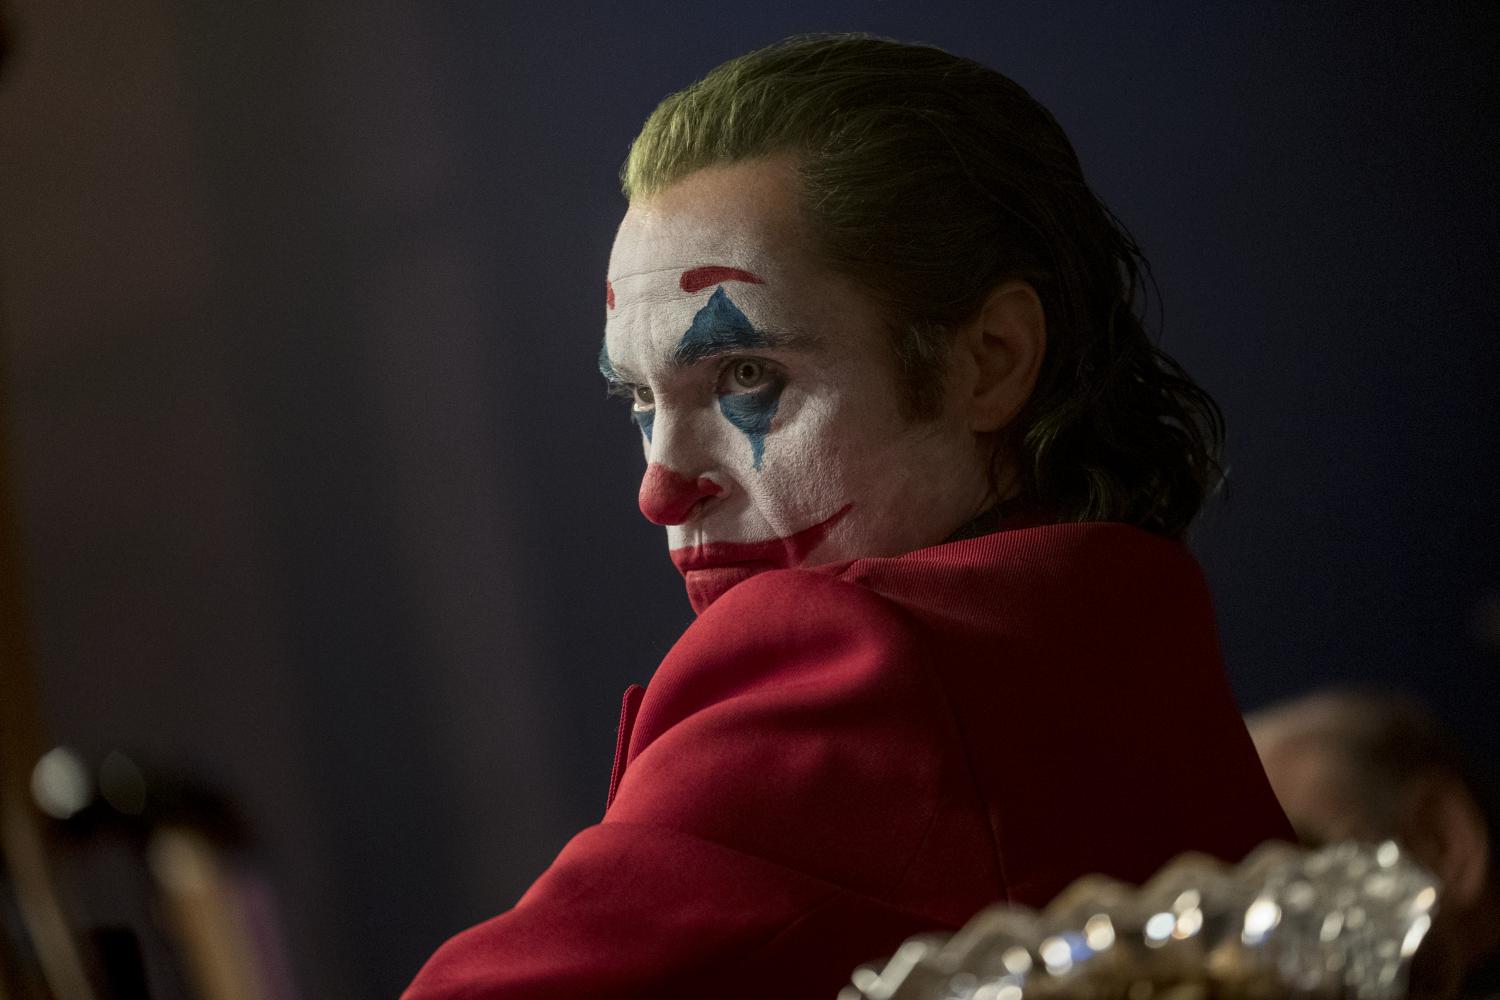  Joaquin Phoenix als Arthur Fleck (Joker) in einer Szene des Films "Joker"